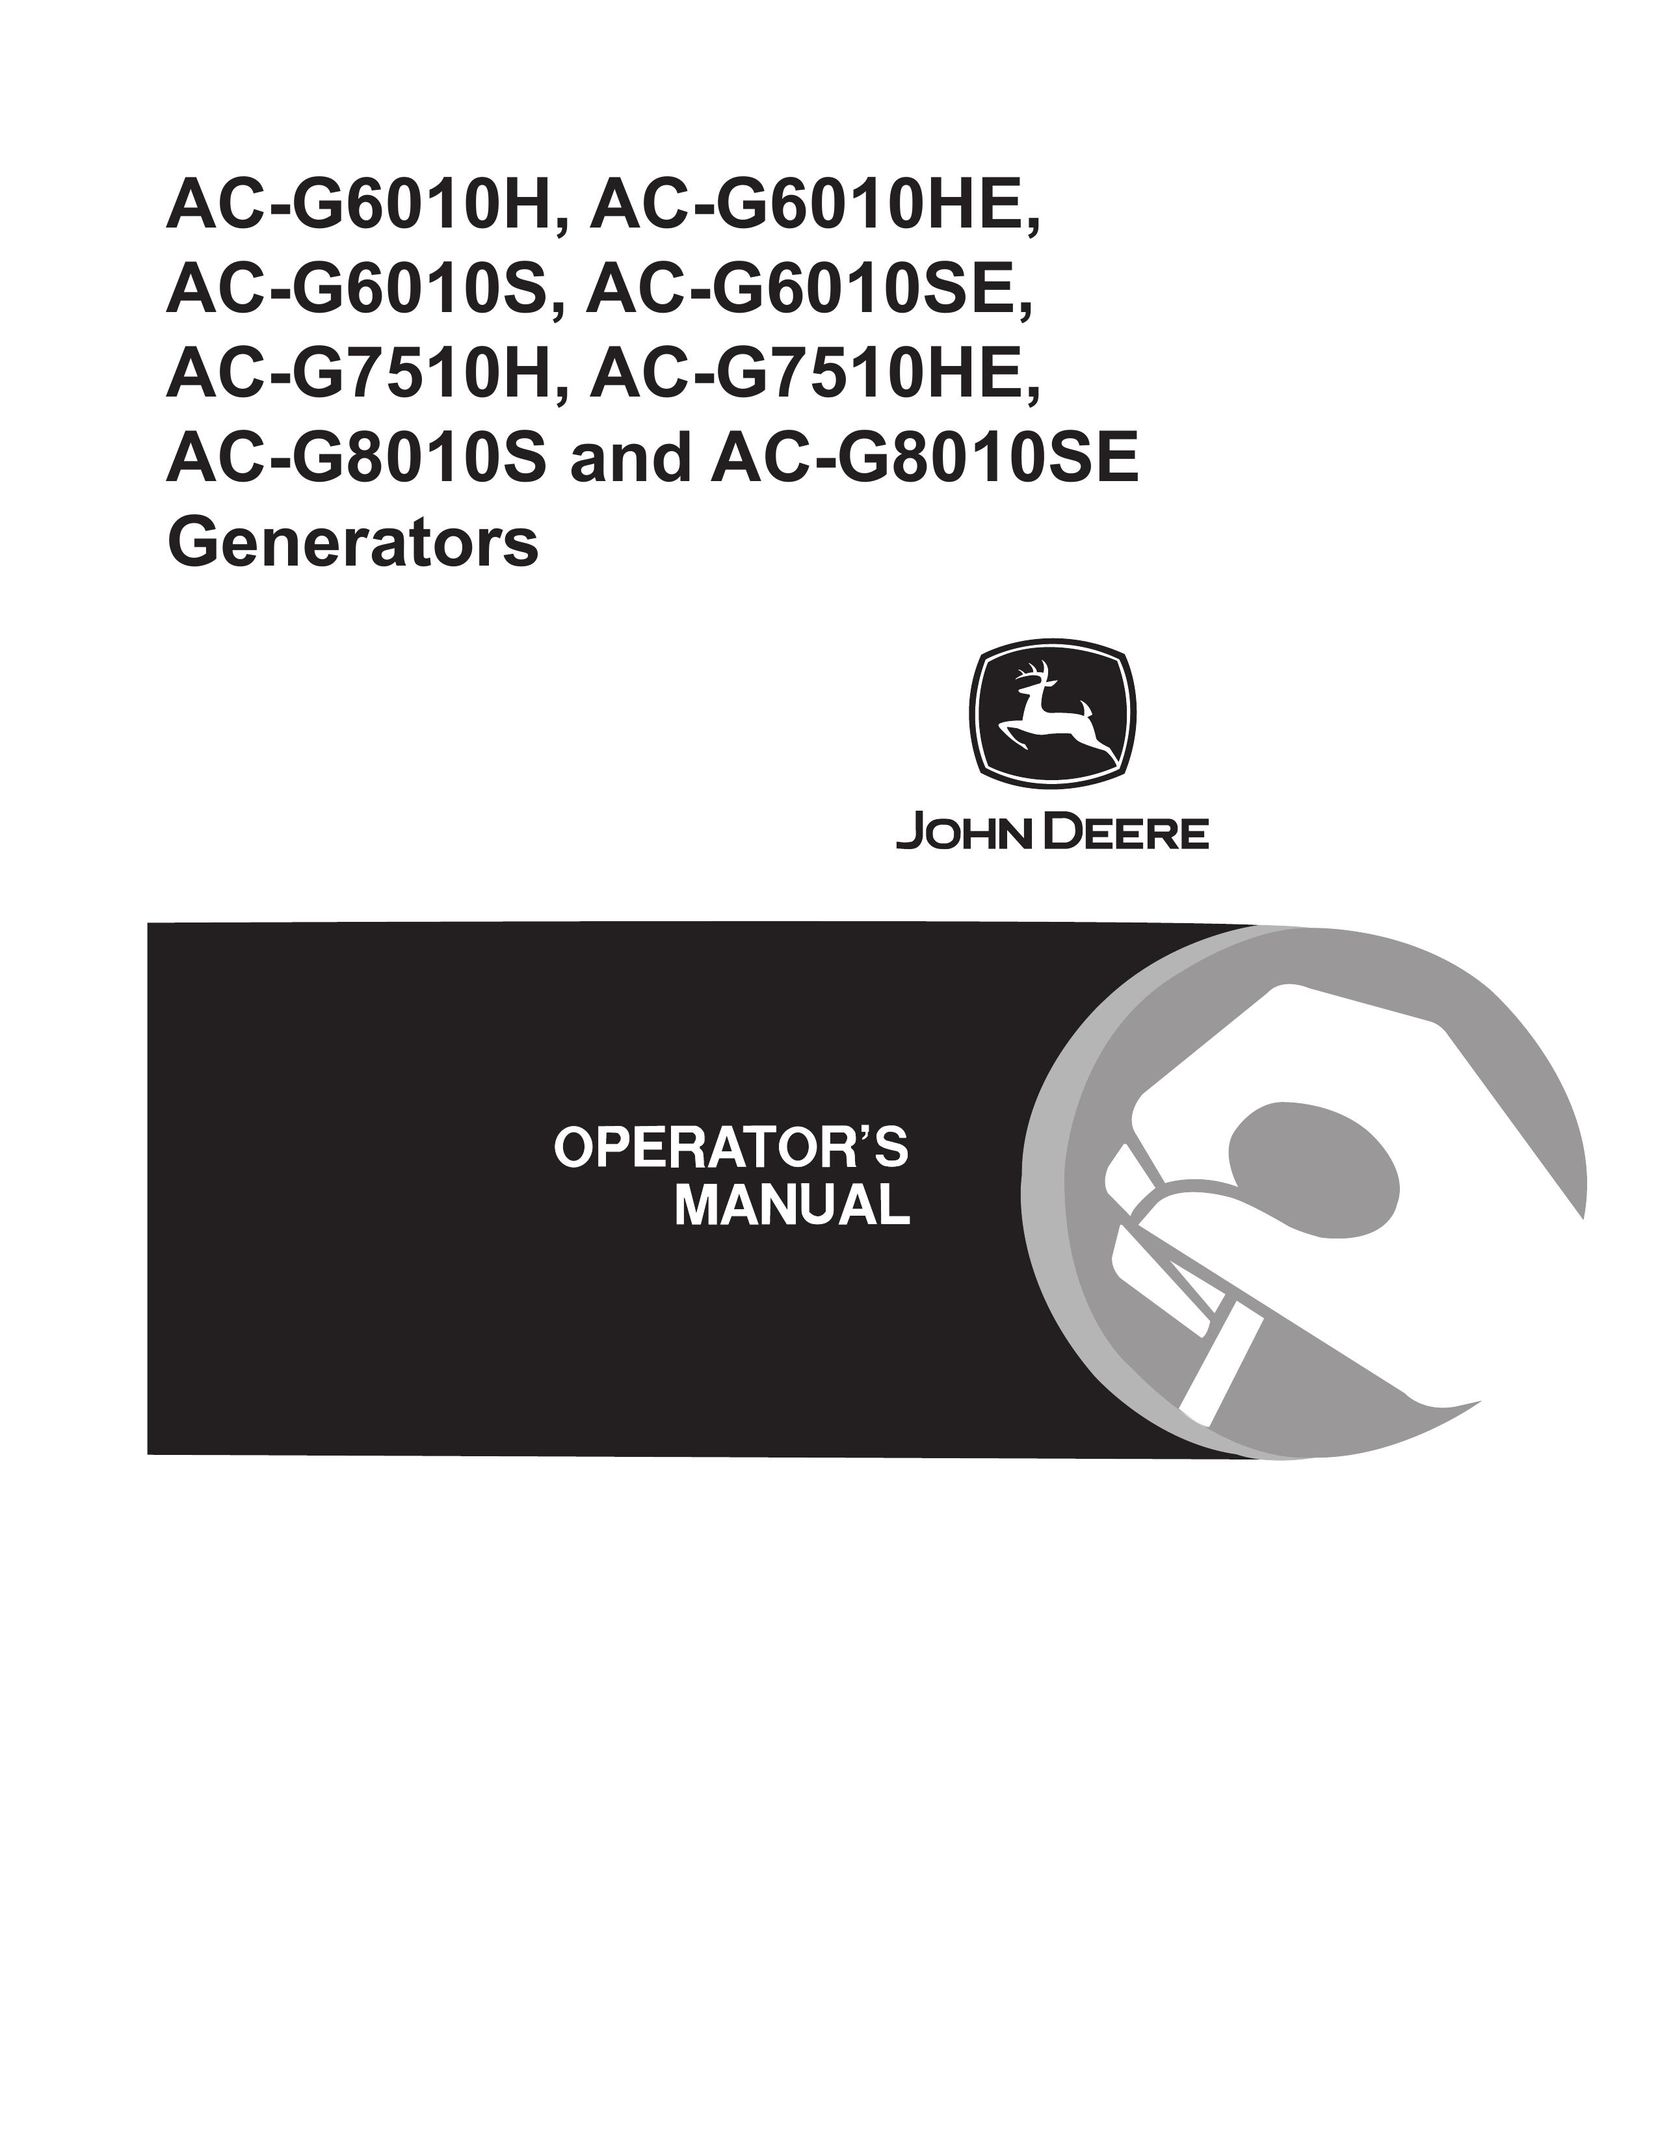 John Deere AC-G6010HE Welding System User Manual